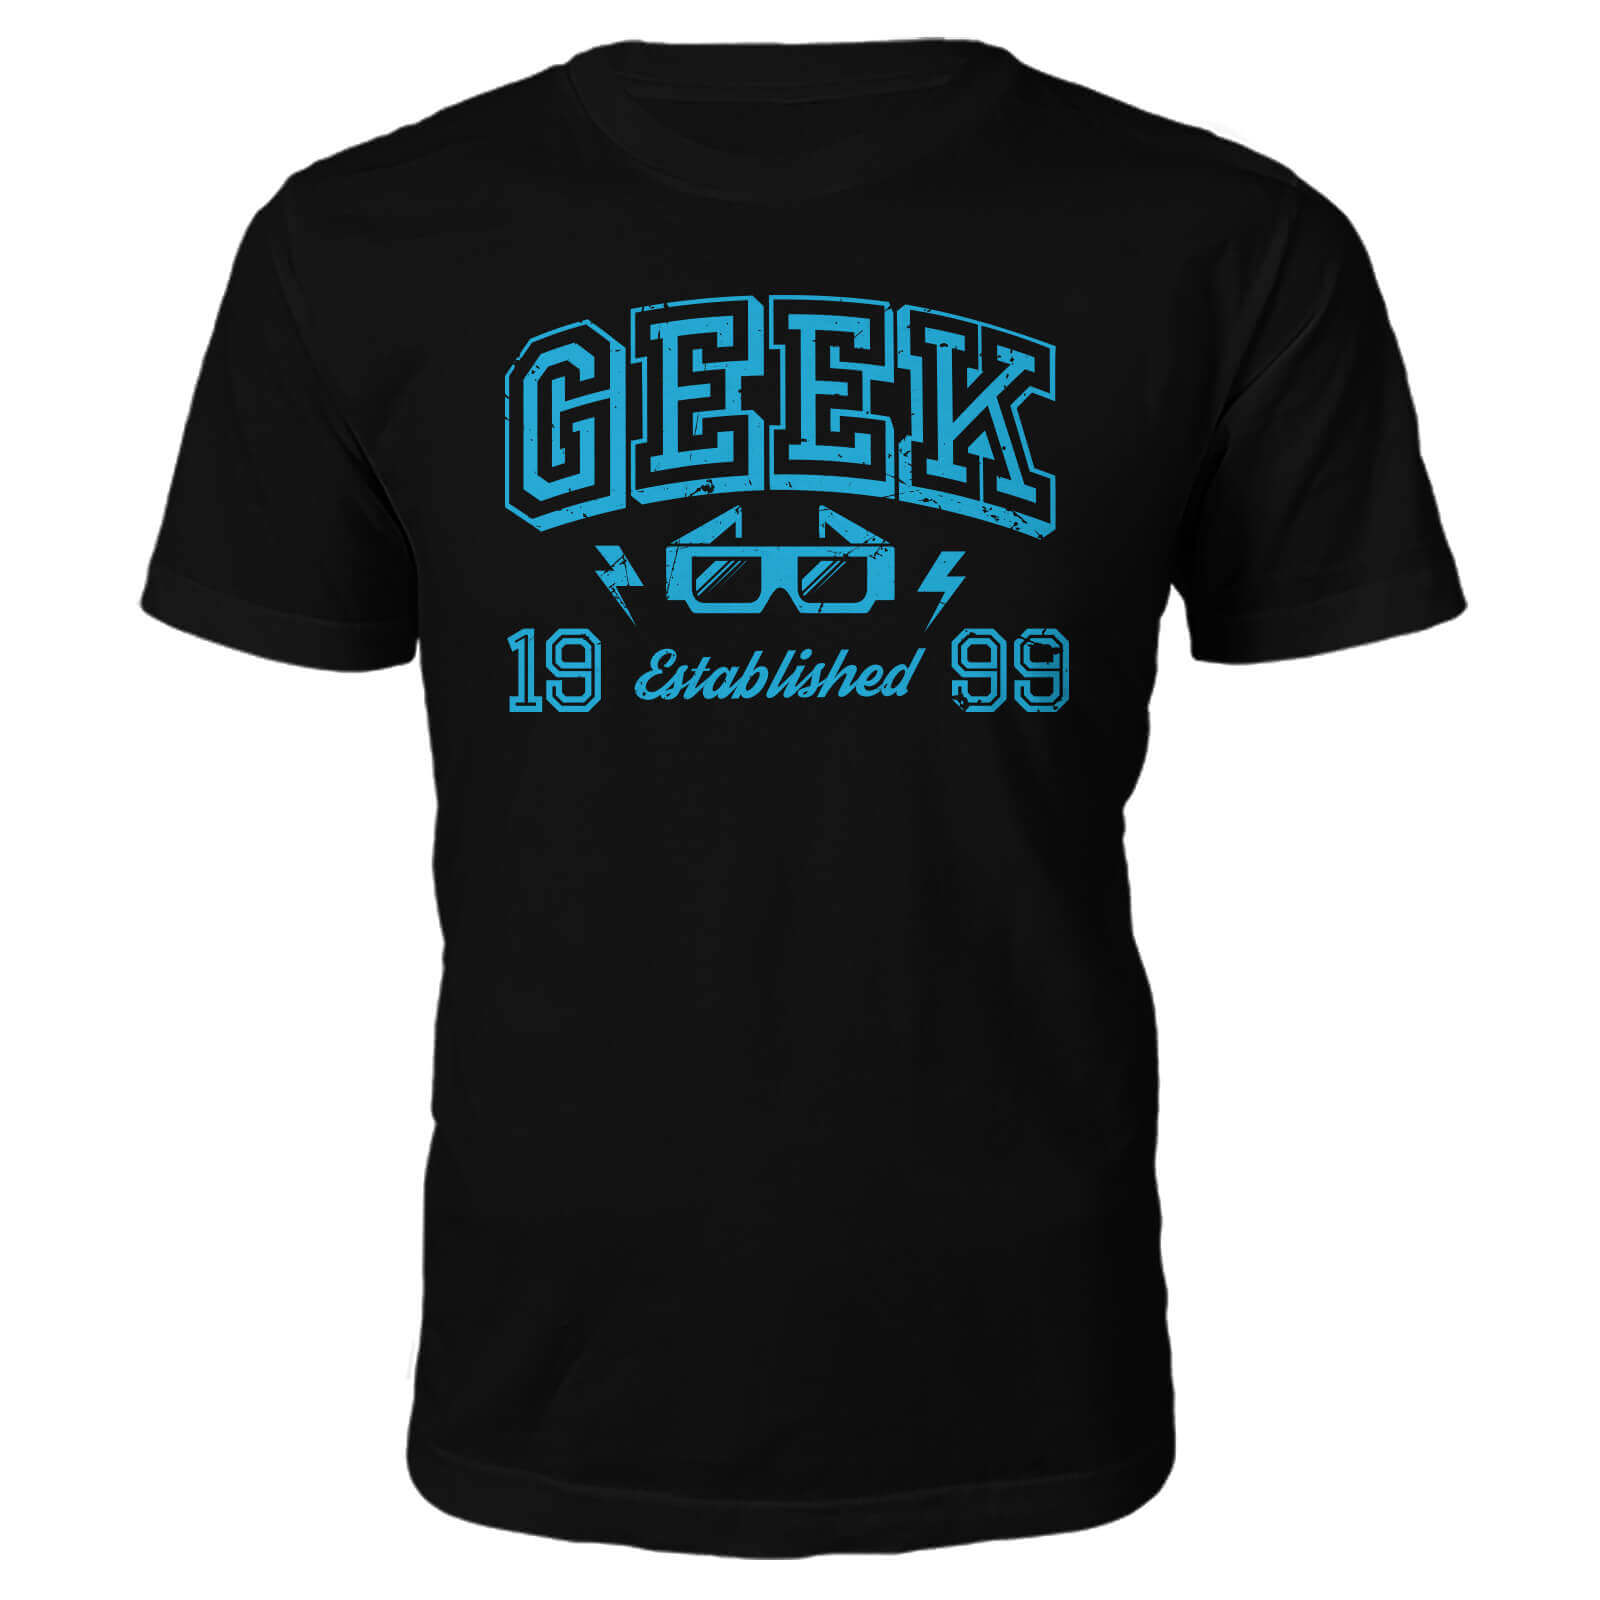 Geek Established 1990's T-Shirt- Black - M - 1999